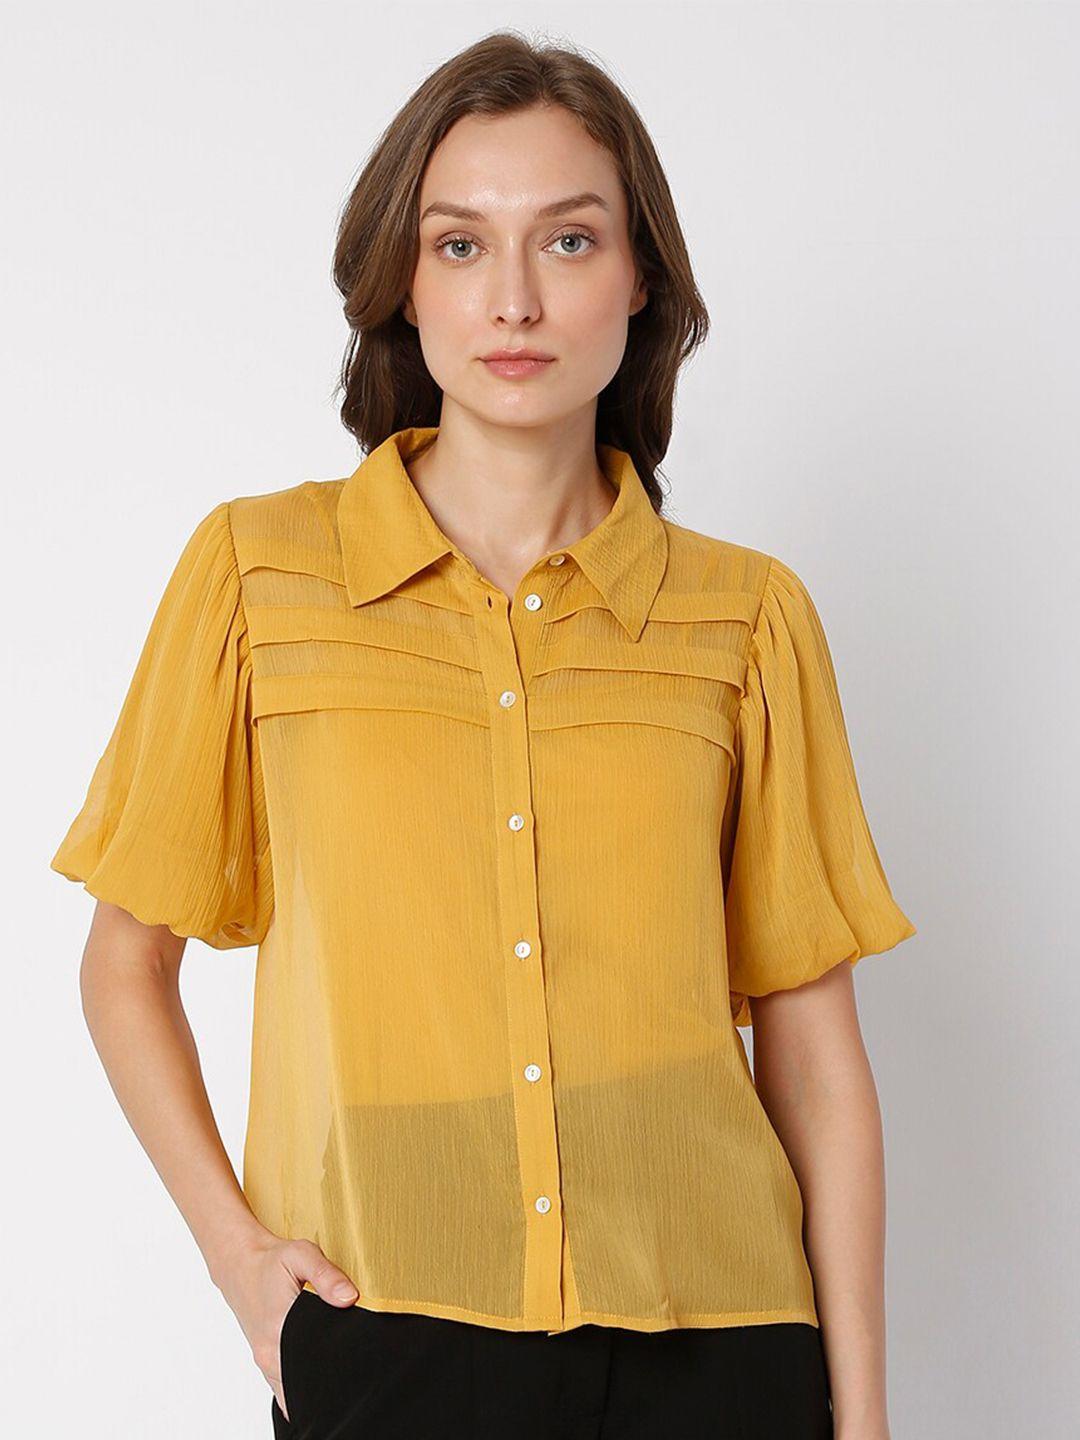 Vero Moda Women Gold Solid Polyester Regular Casual Shirt